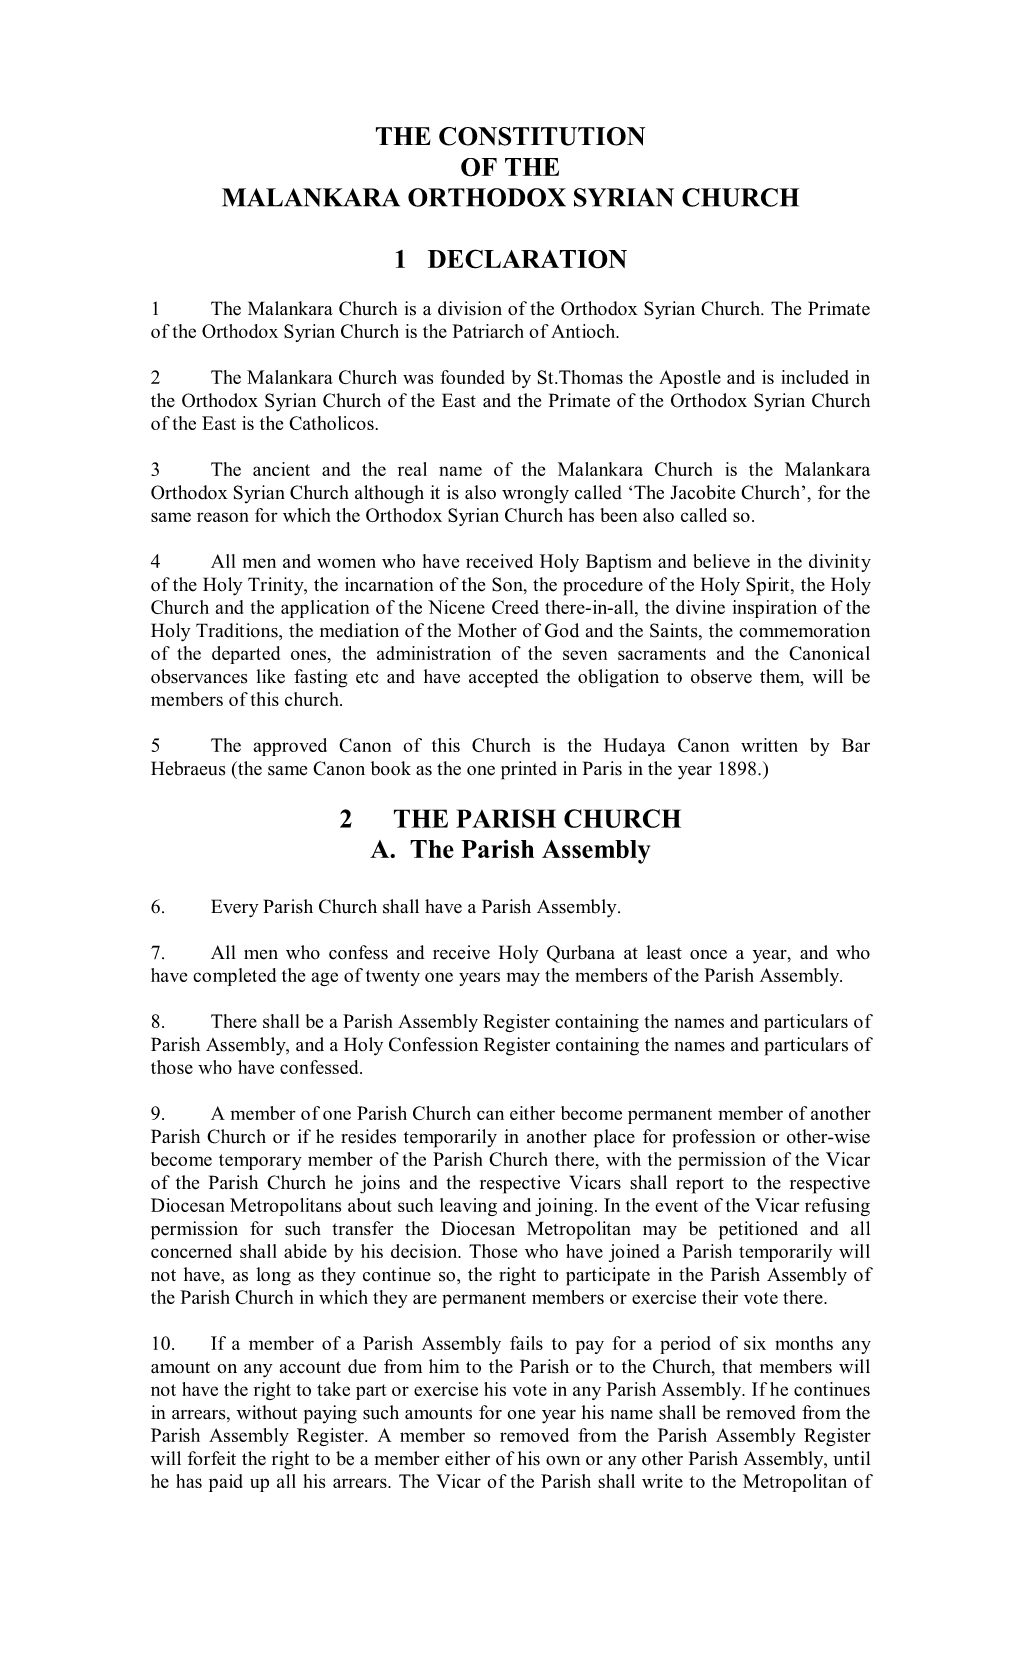 The Constitution of the Malankara Orthodox Syrian Church